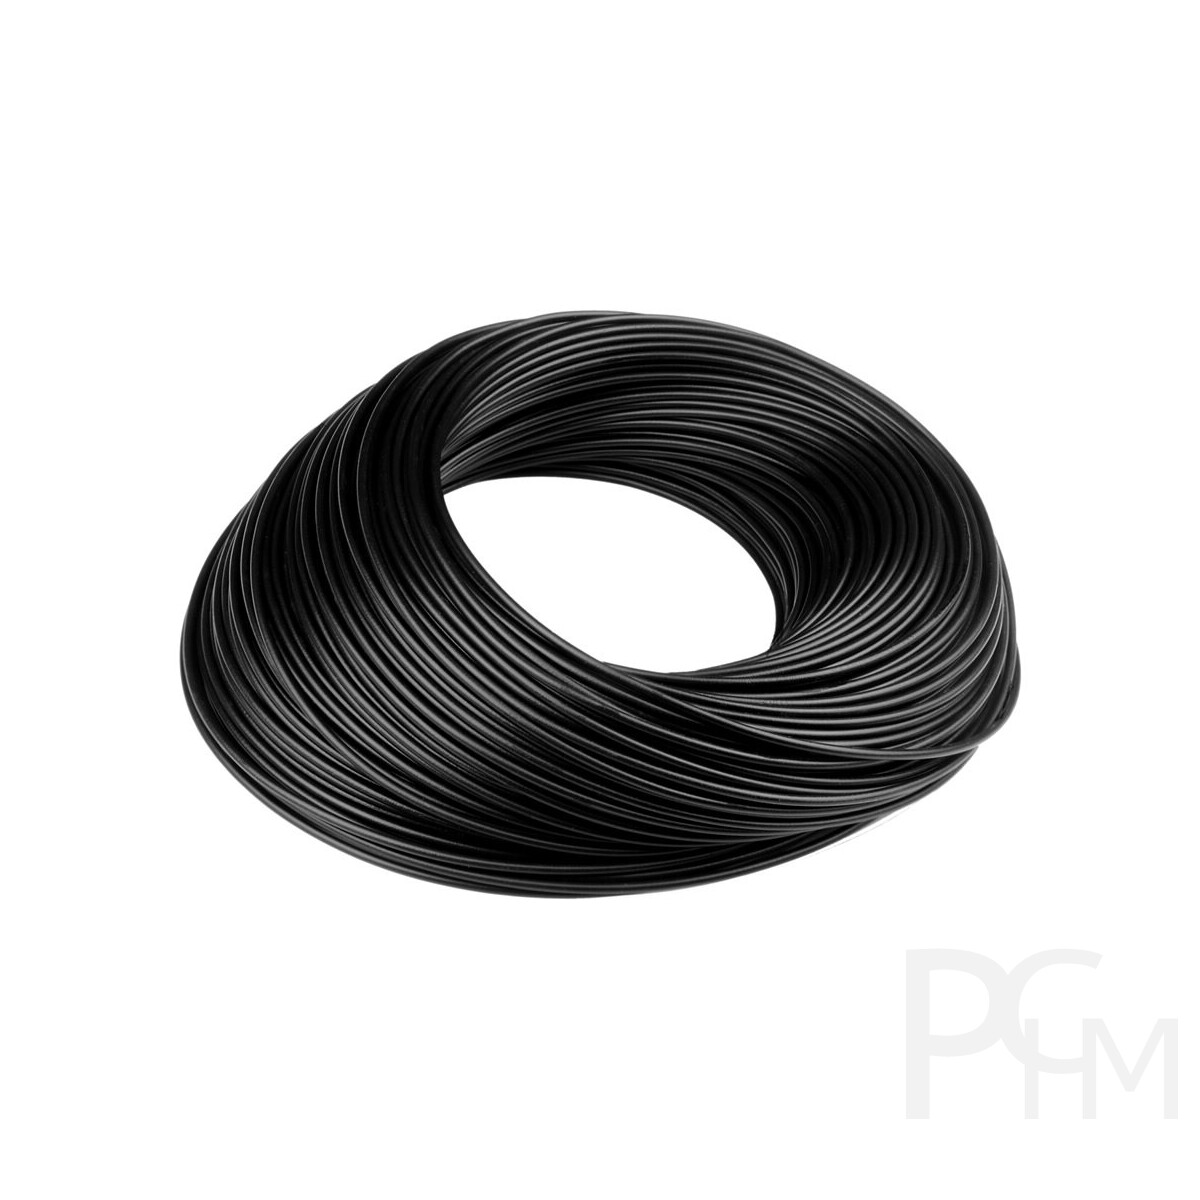 https://pchm.de/media/image/product/348/lg/litze-wire-i-einzelader-1mm.jpg